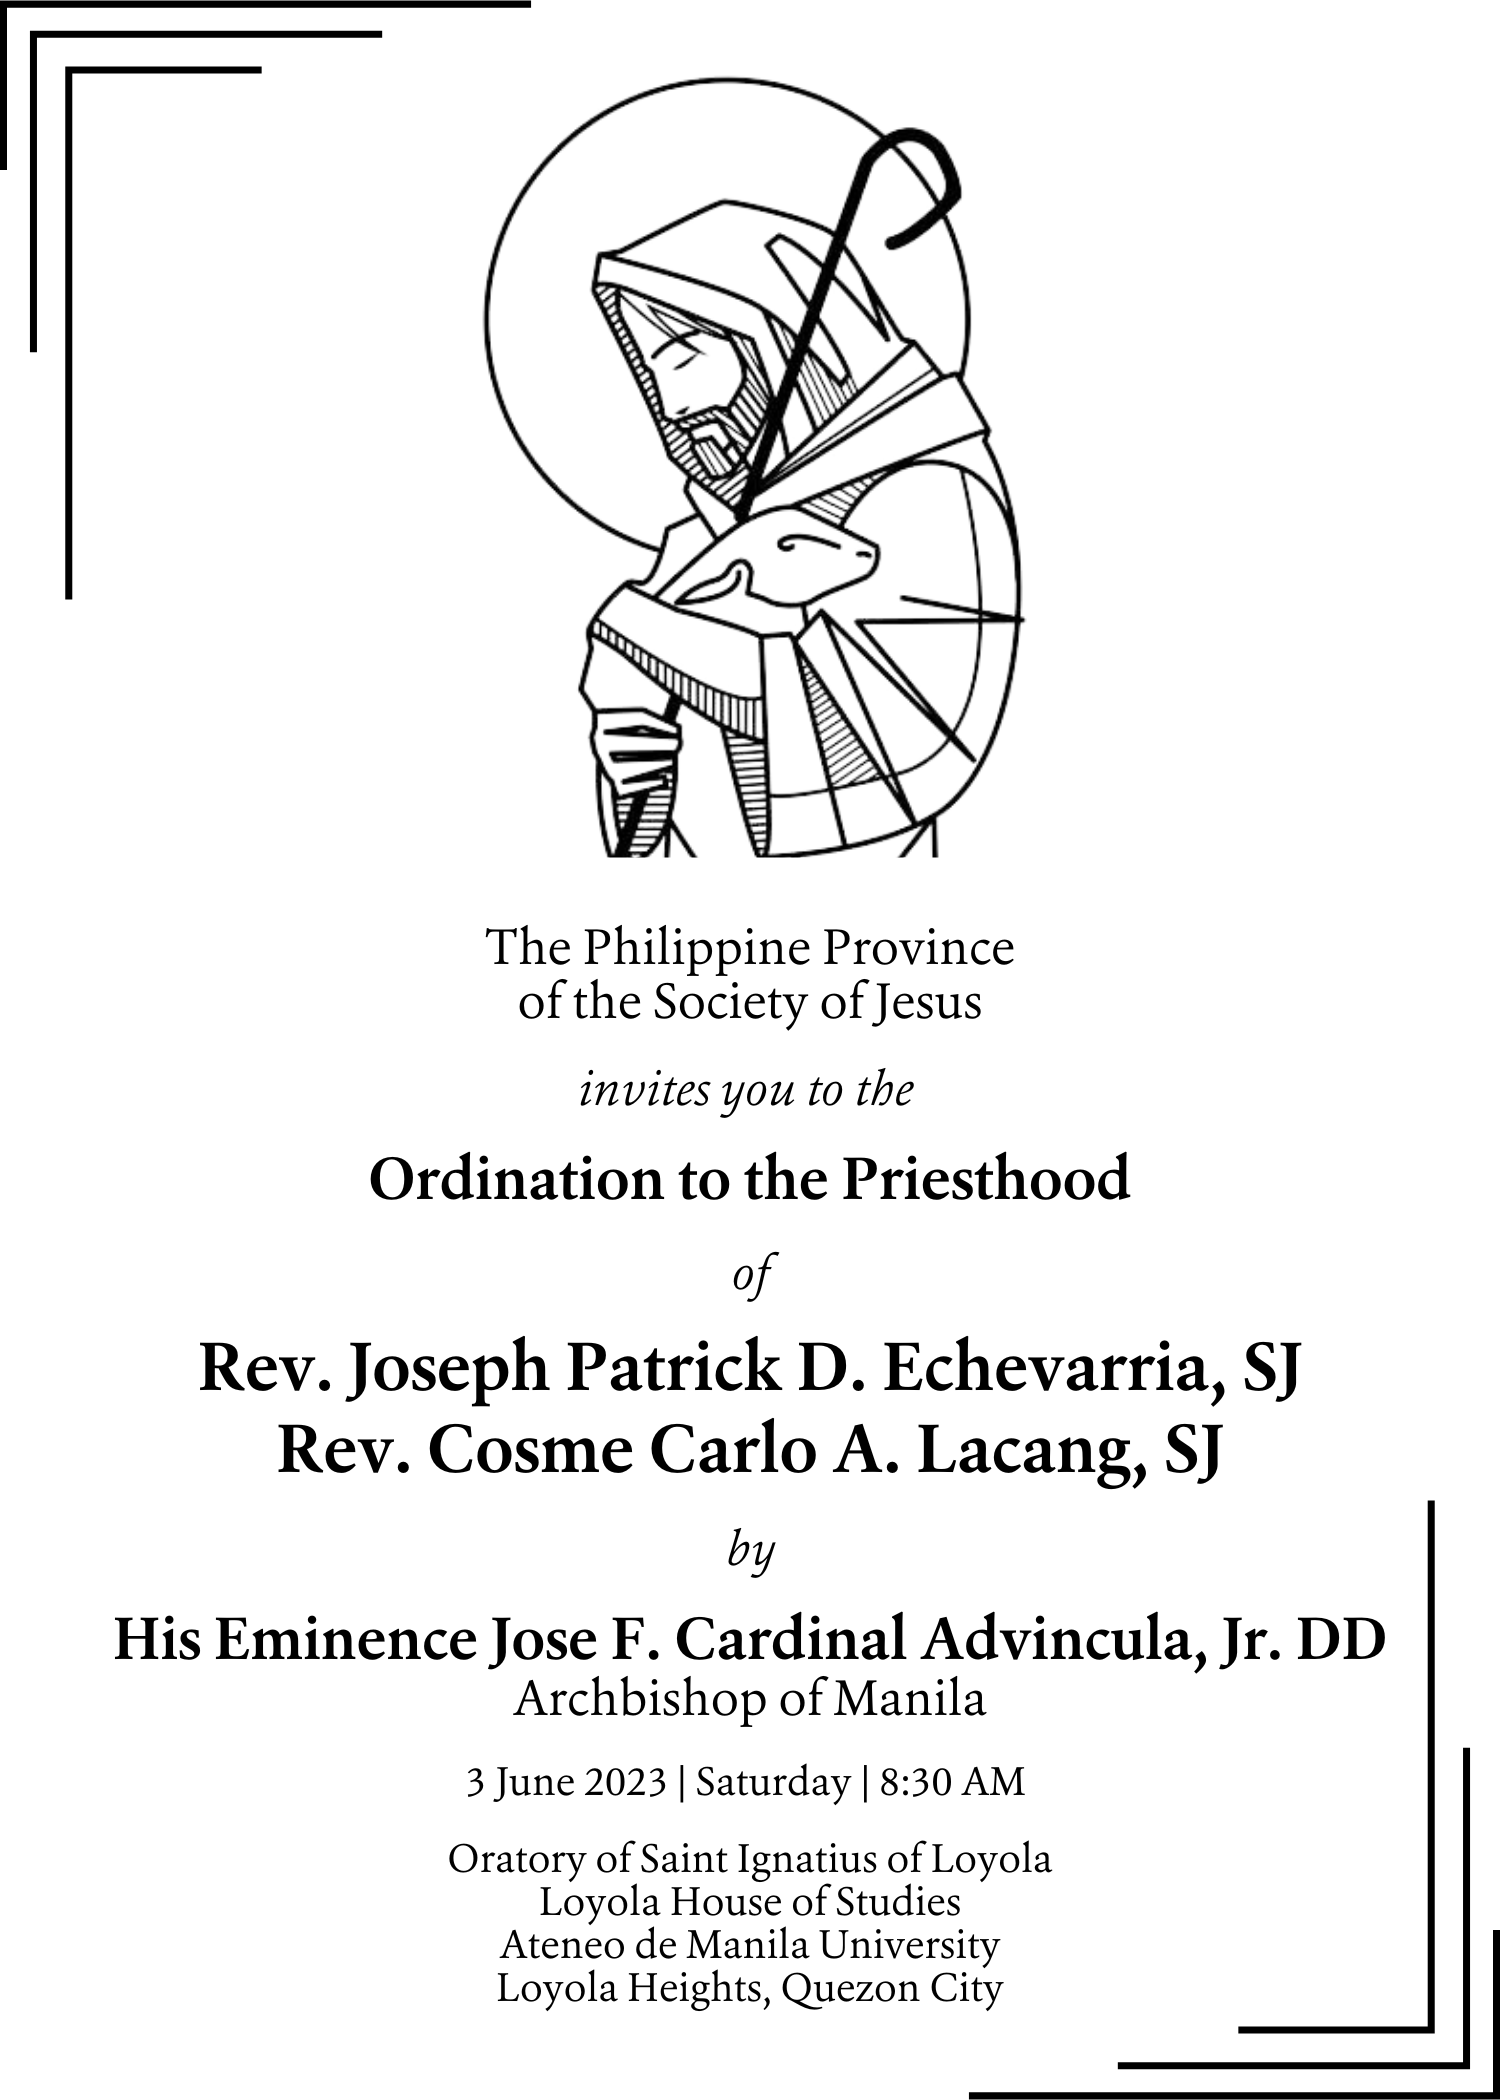 PH Jesuits Celebrate Ordination of 2 New Priests